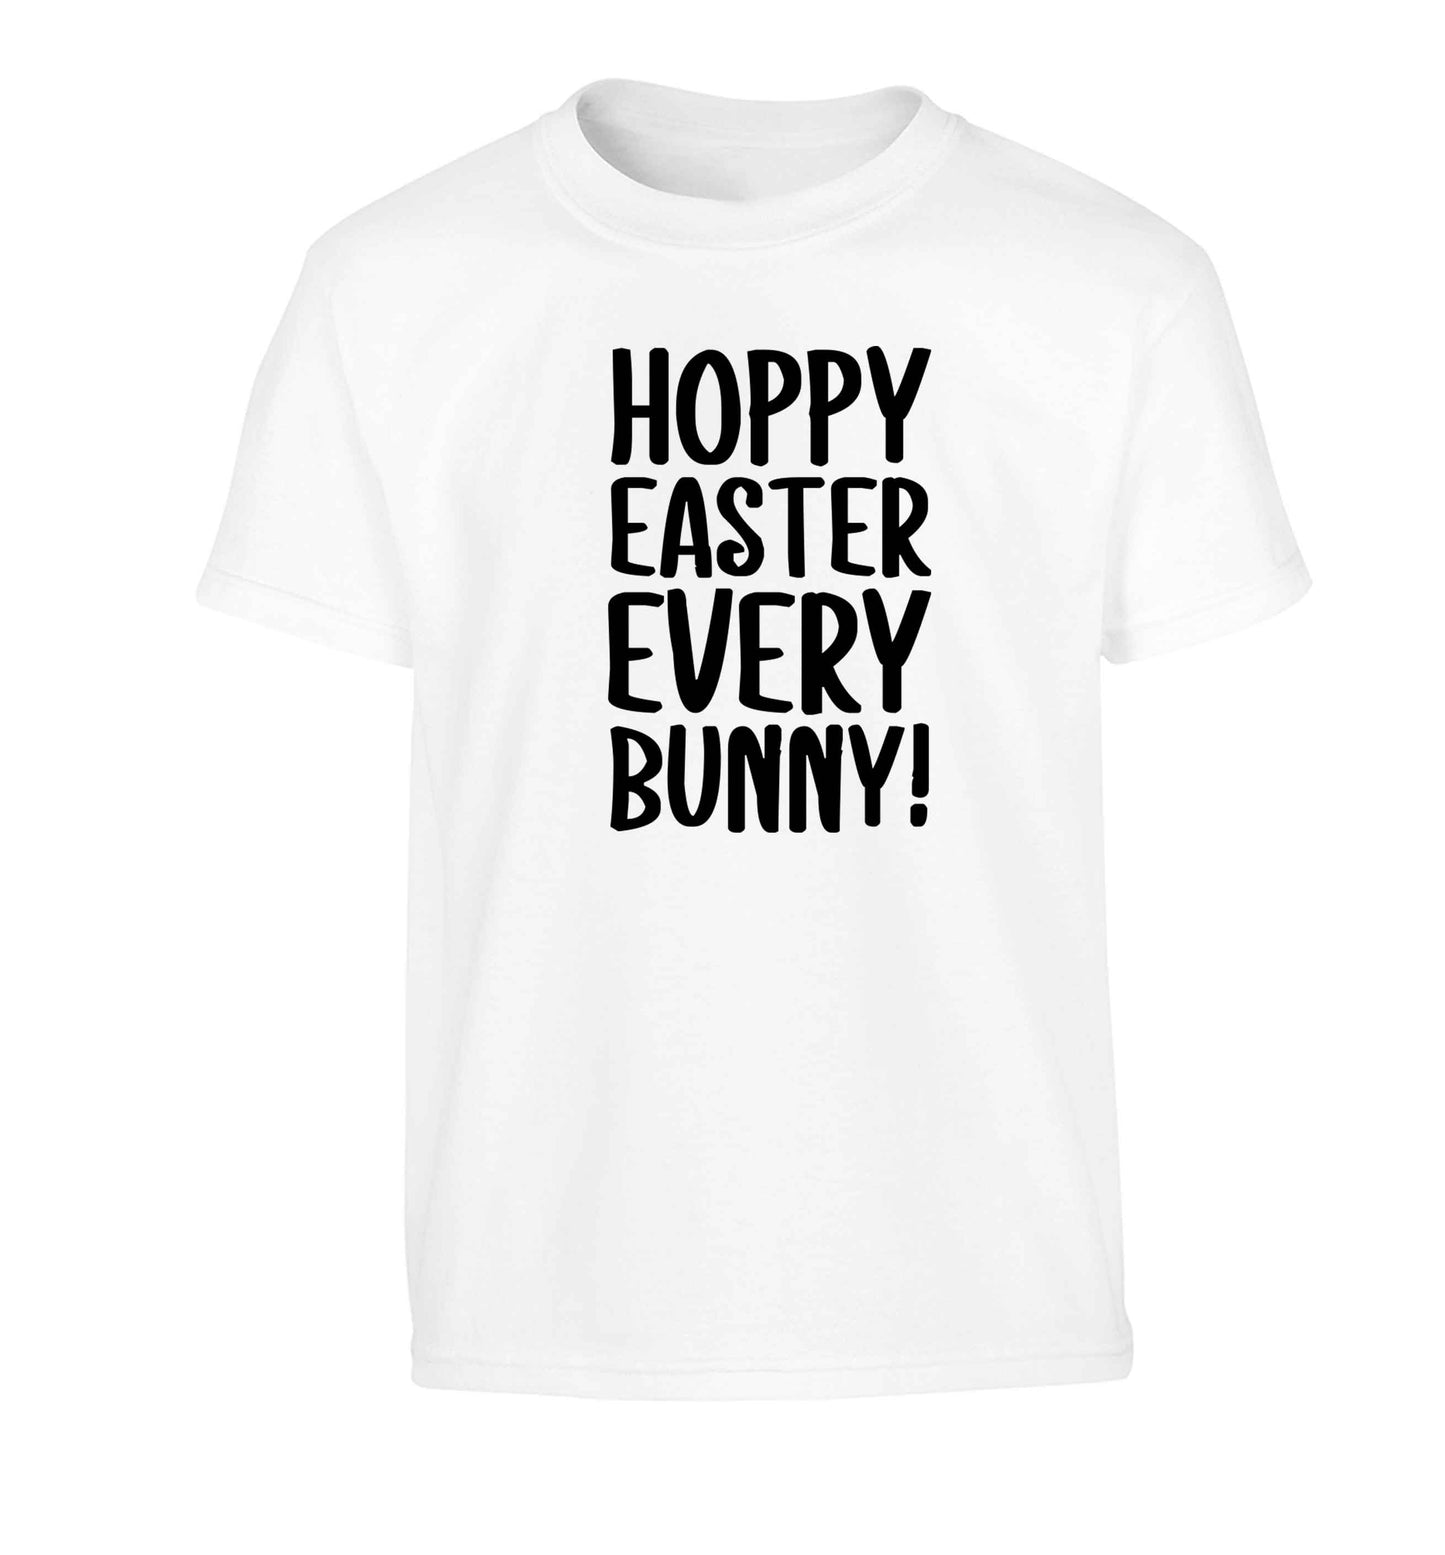 Hoppy Easter every bunny! Children's white Tshirt 12-13 Years